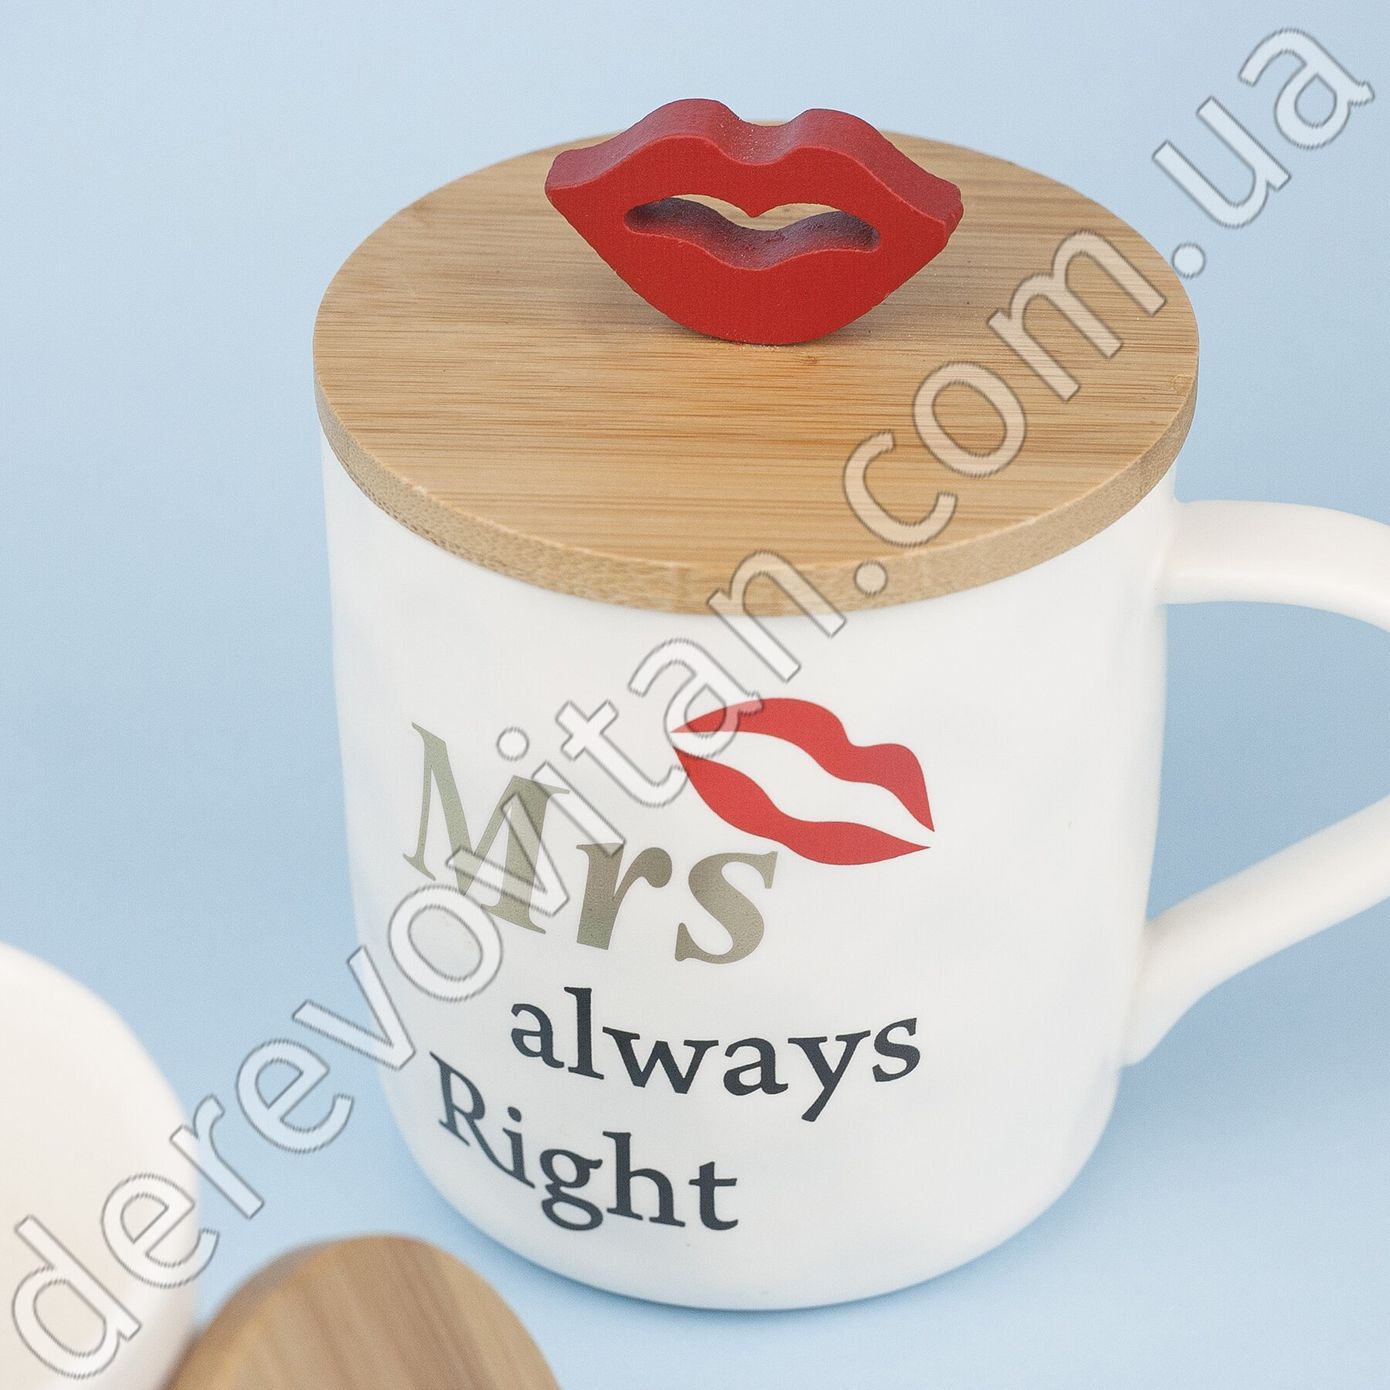 Набор керамических чашек "Mr Right" "Mrs always Right", 2 шт. c крышками